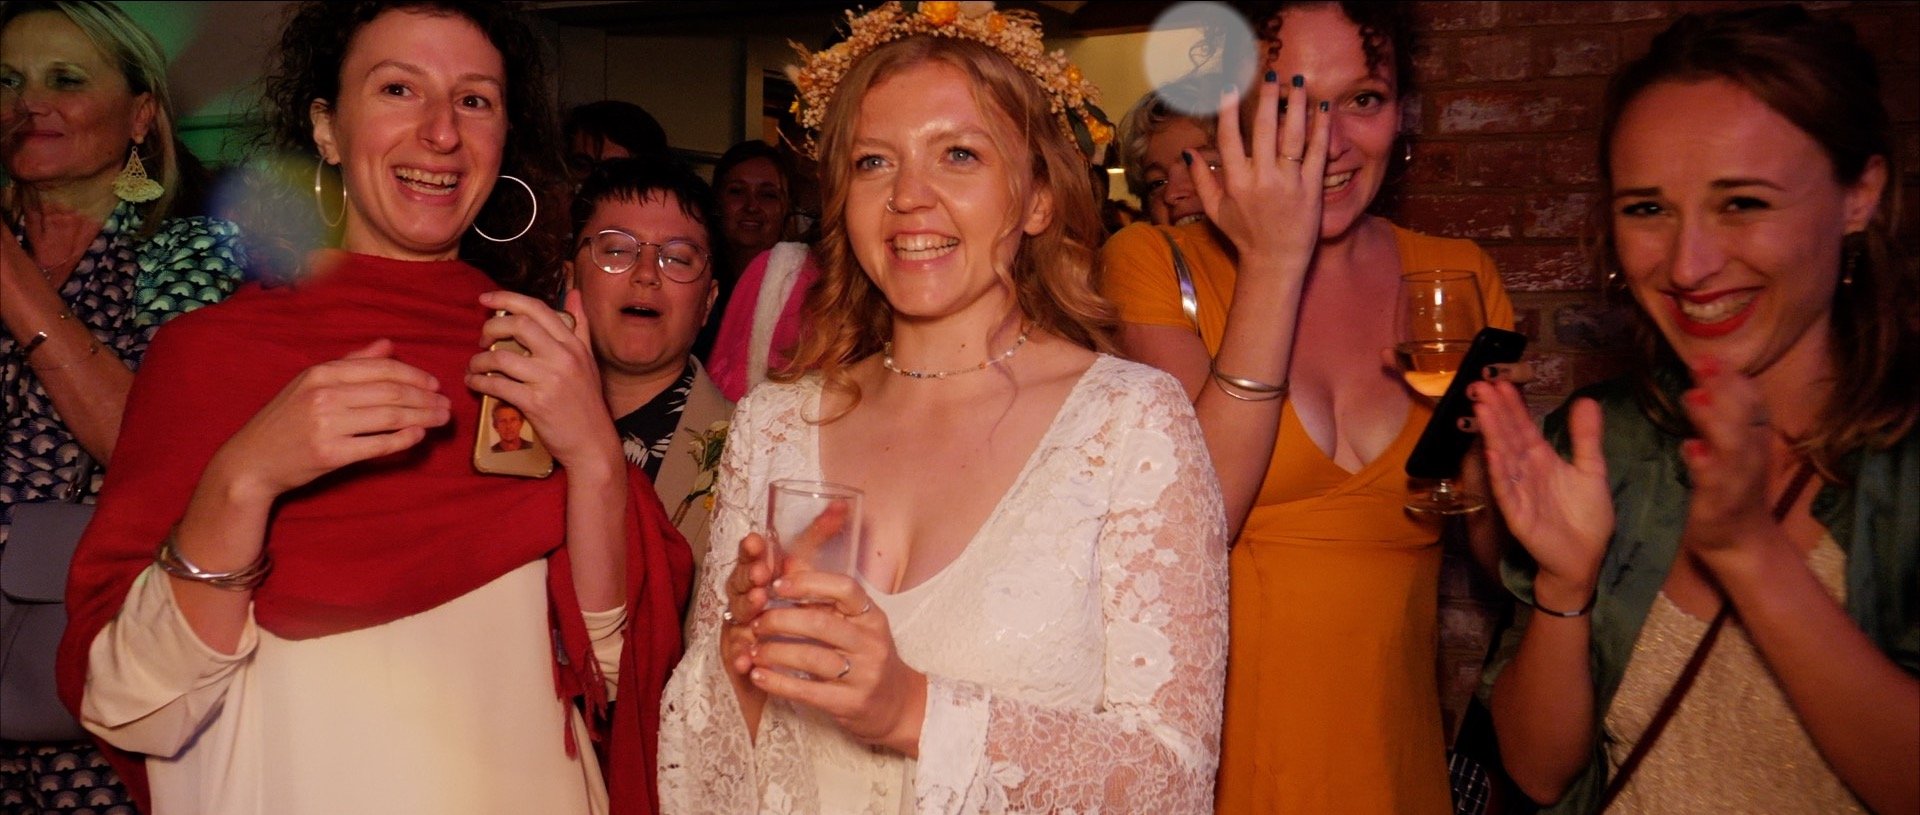 Wedding party videos - Essex videography.jpg